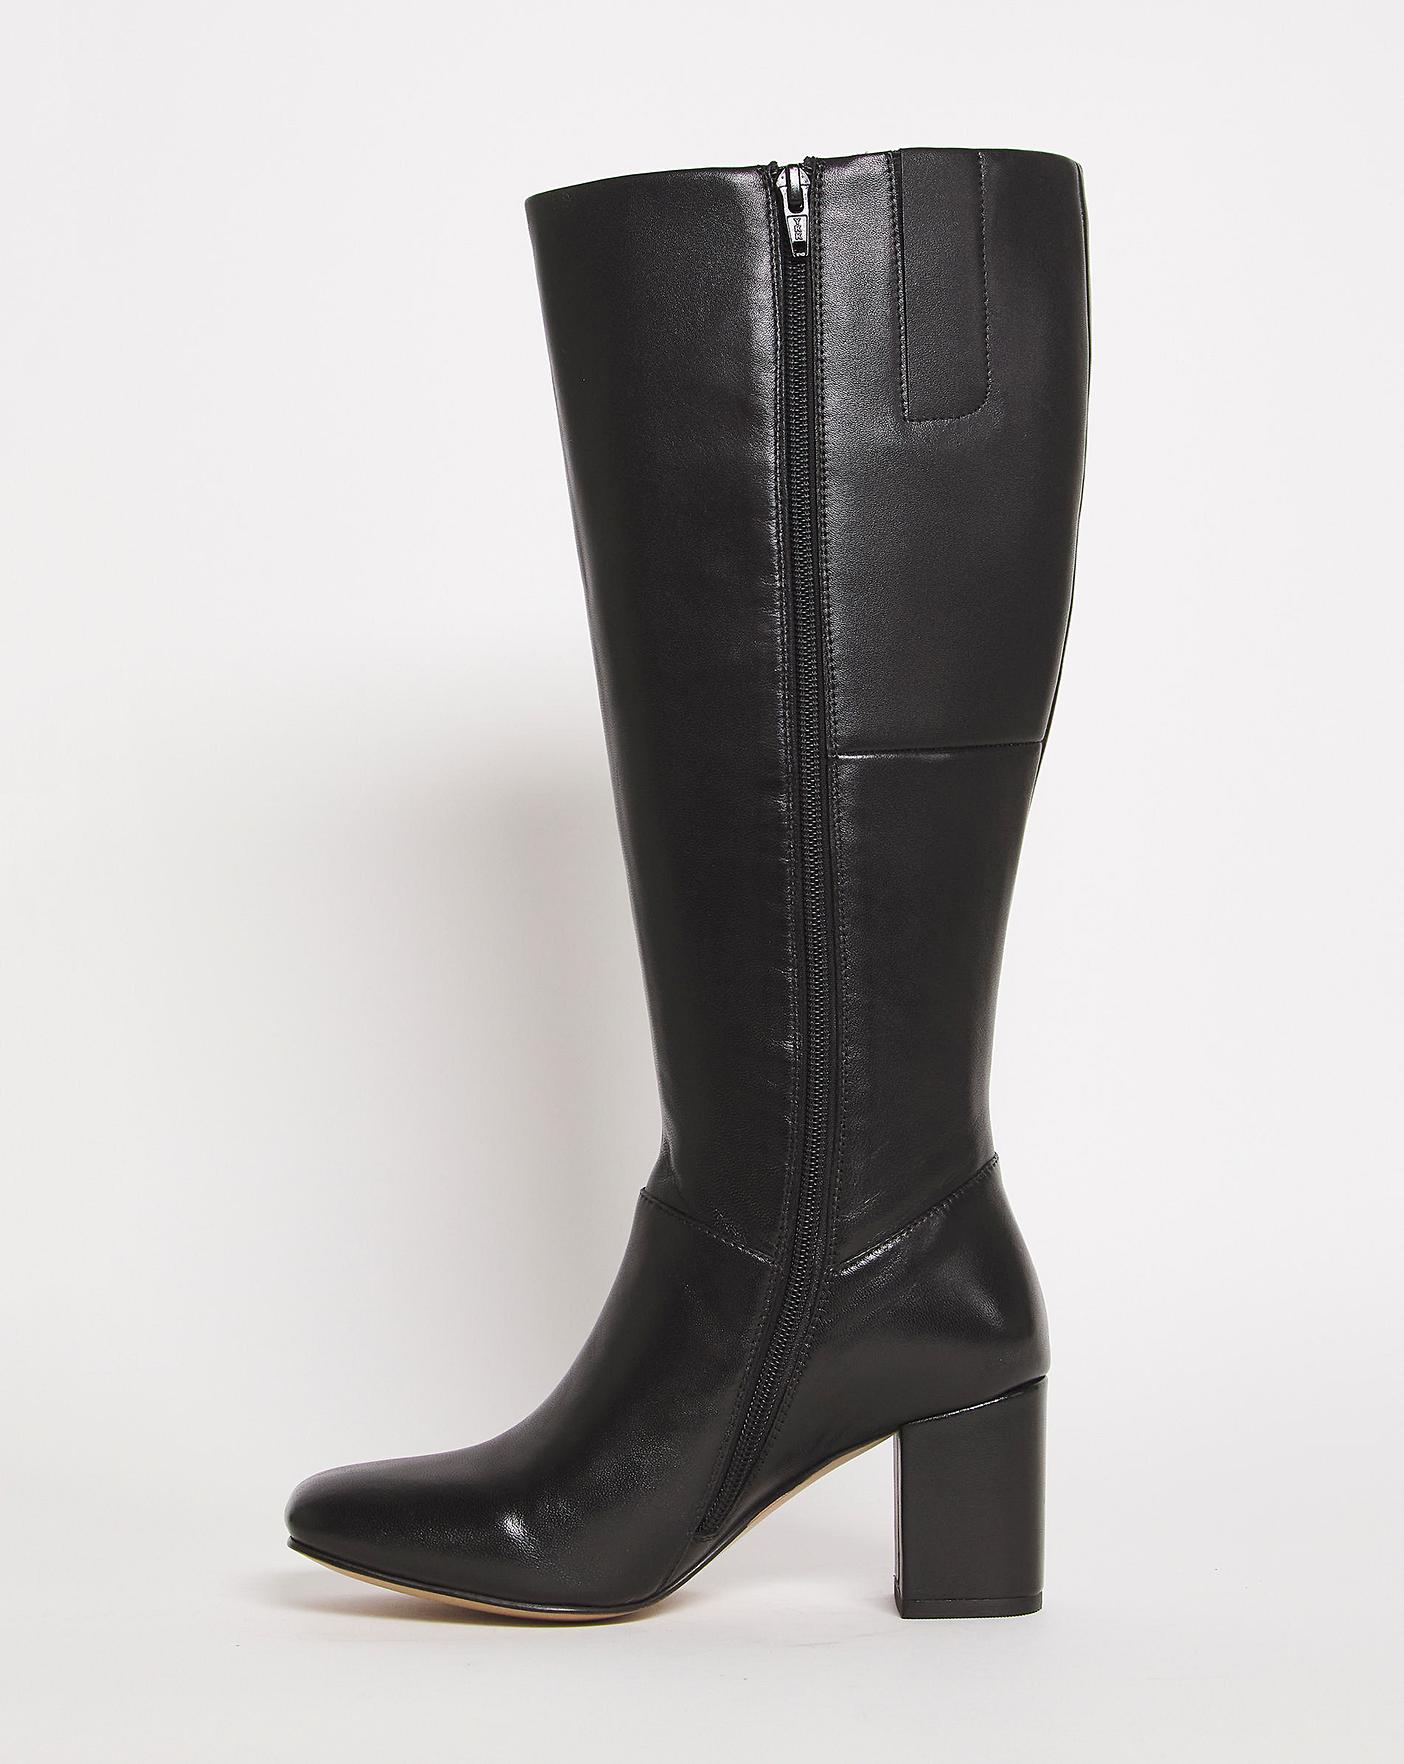 Leather High Leg Boot E Fit Curvy Calf | Marisota